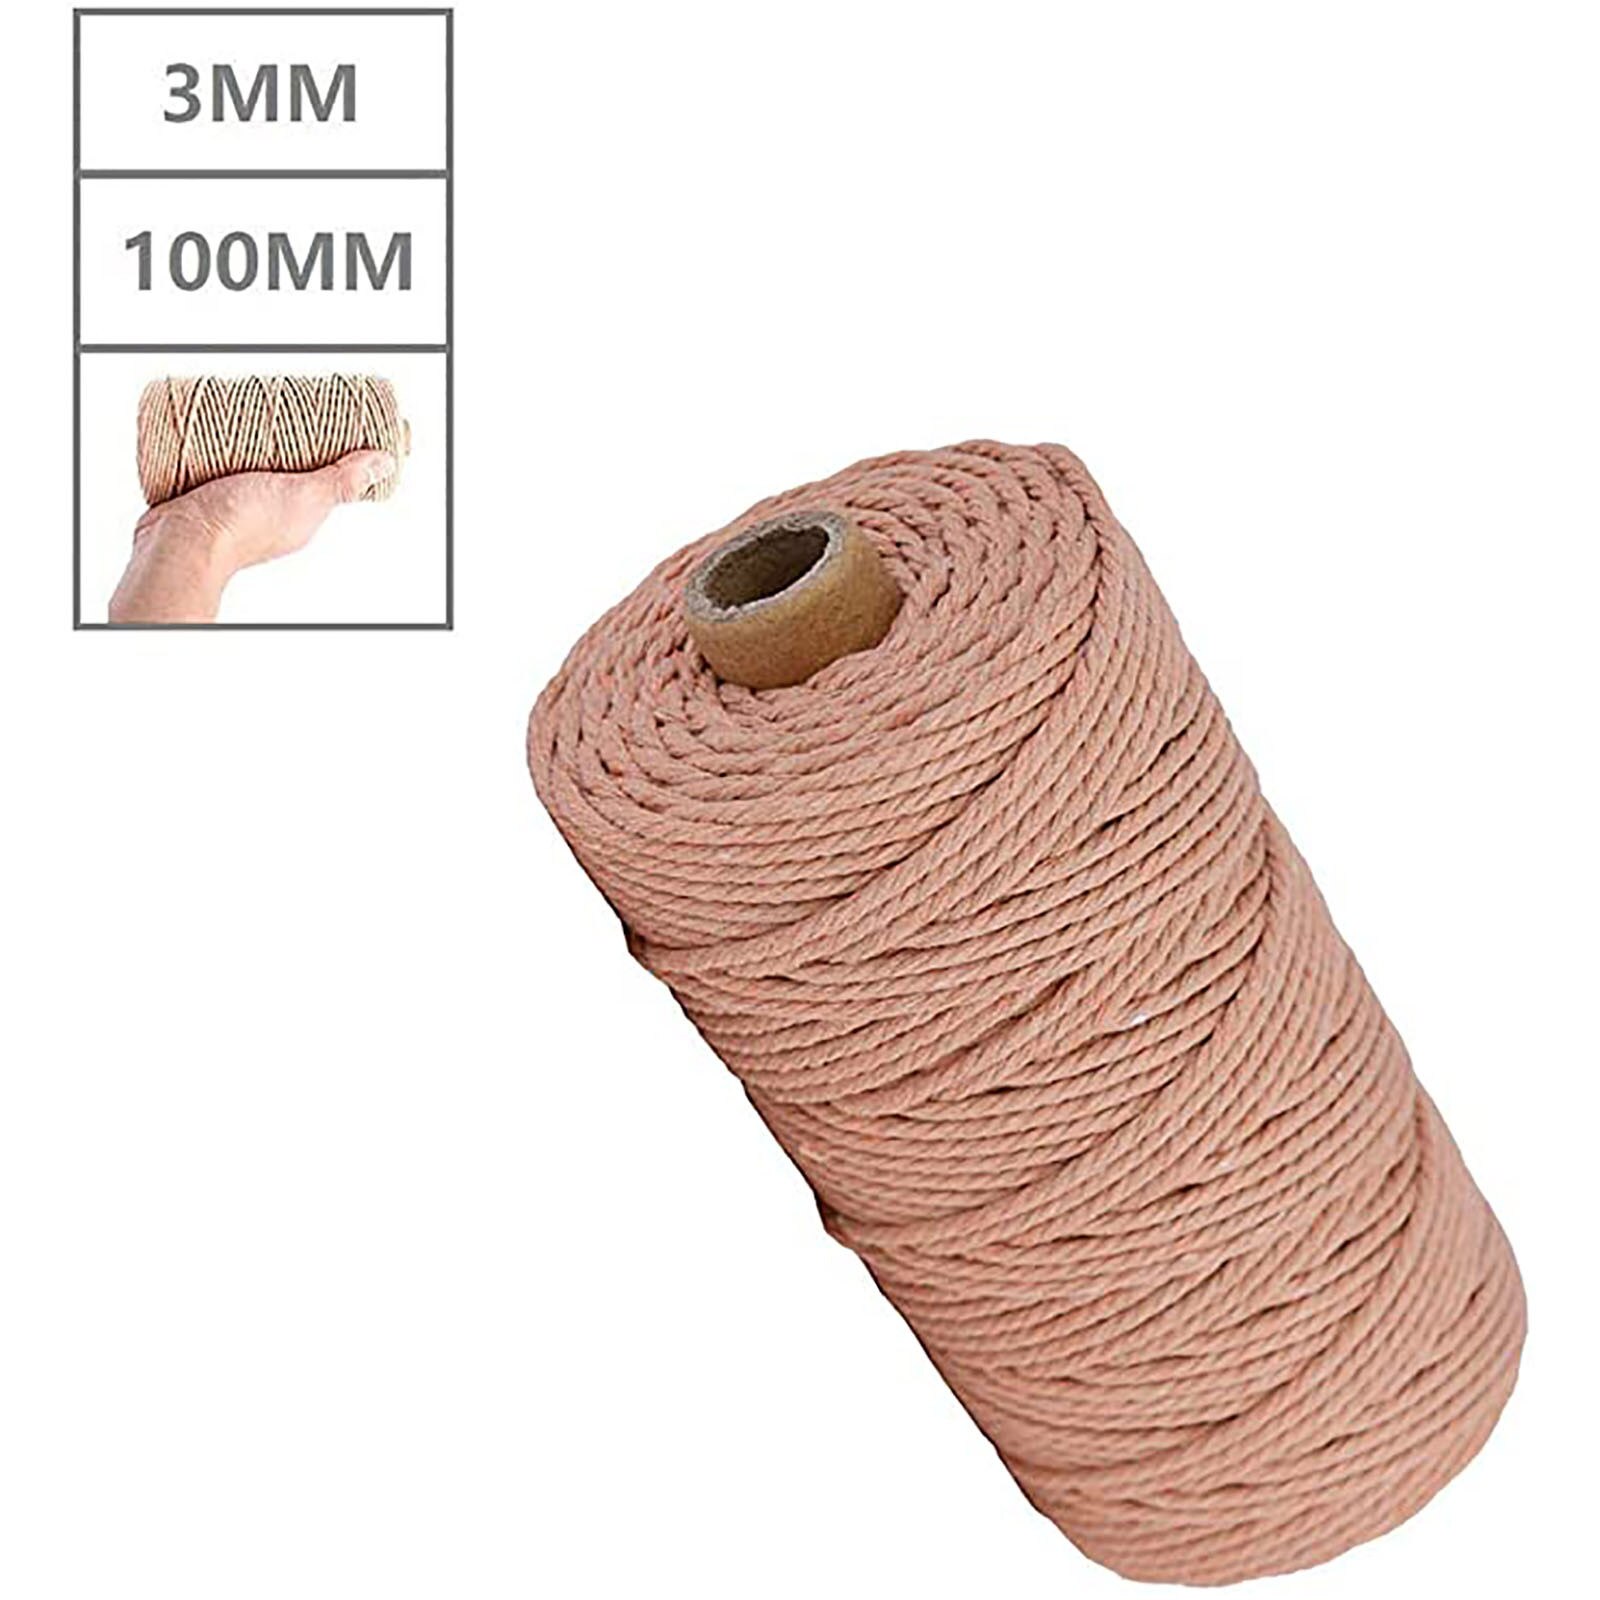 3Mm Macrame Katoenen Koord Opknoping Touw Craft Cord Diy Ambachten Breien 100M Handgemaakte Kleding Maken Cords